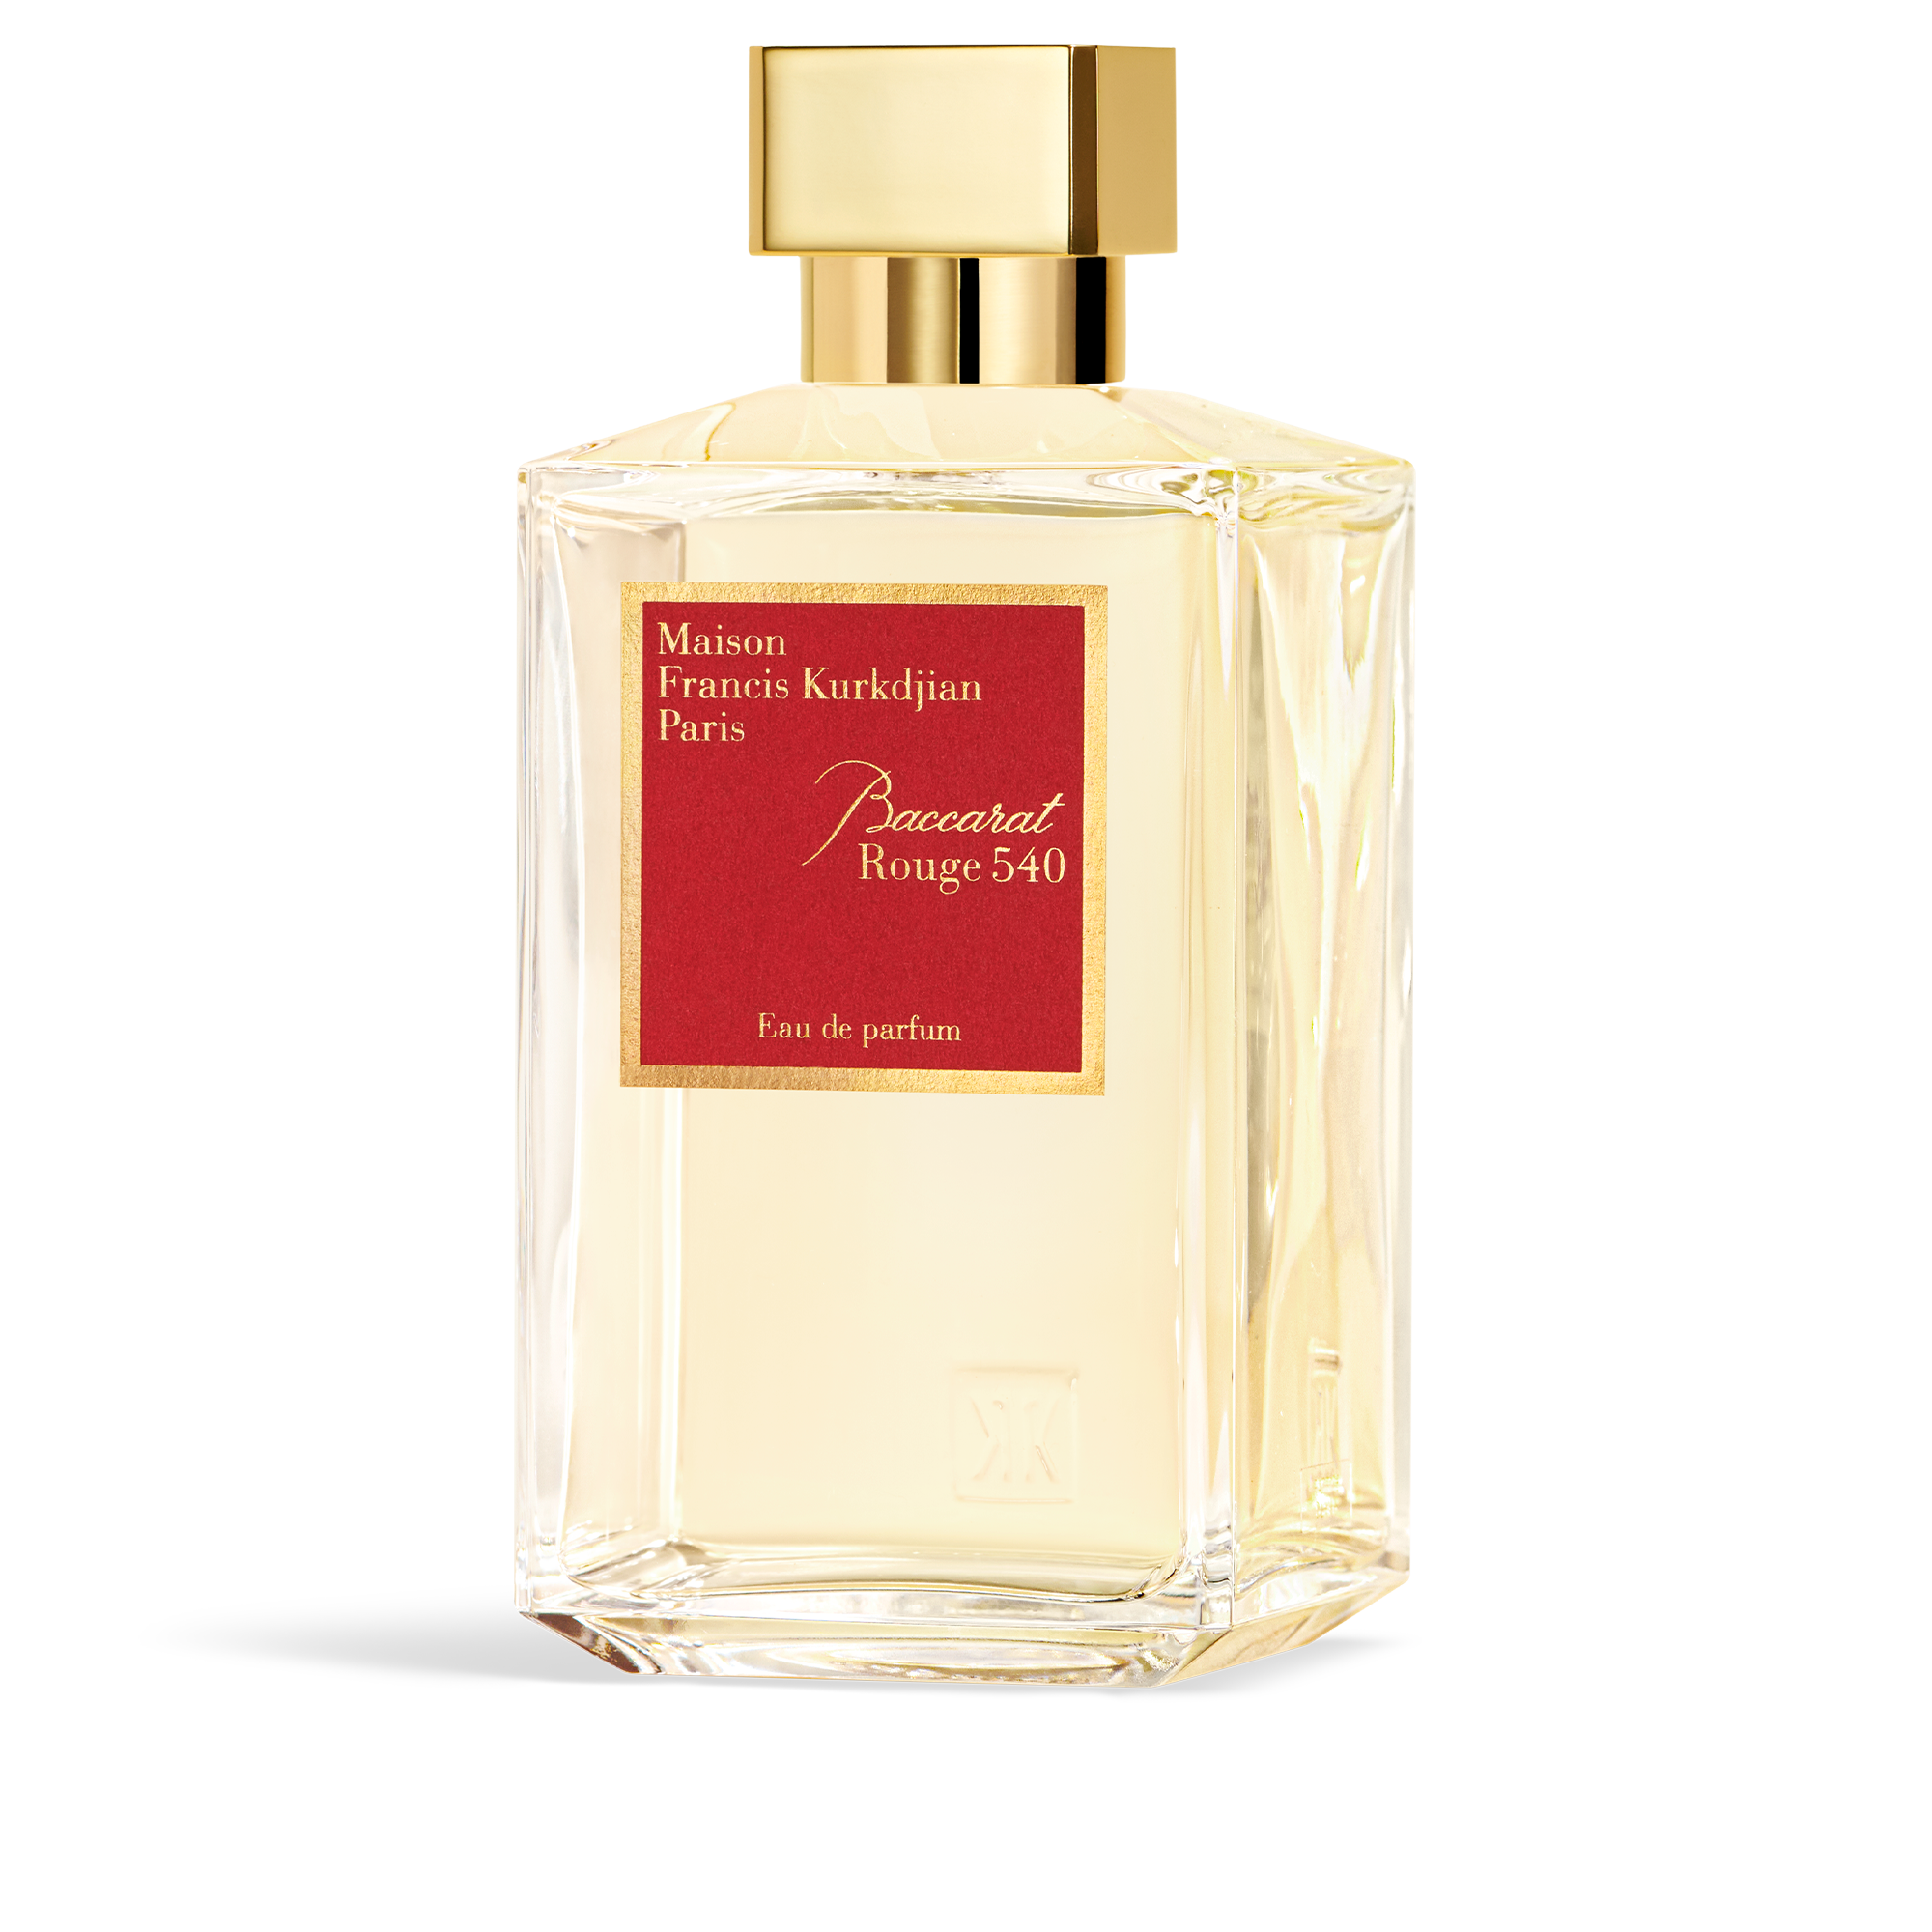 Maison Francis Kurkdjian Baccarat Rouge 540 Eau de parfum - 200ml